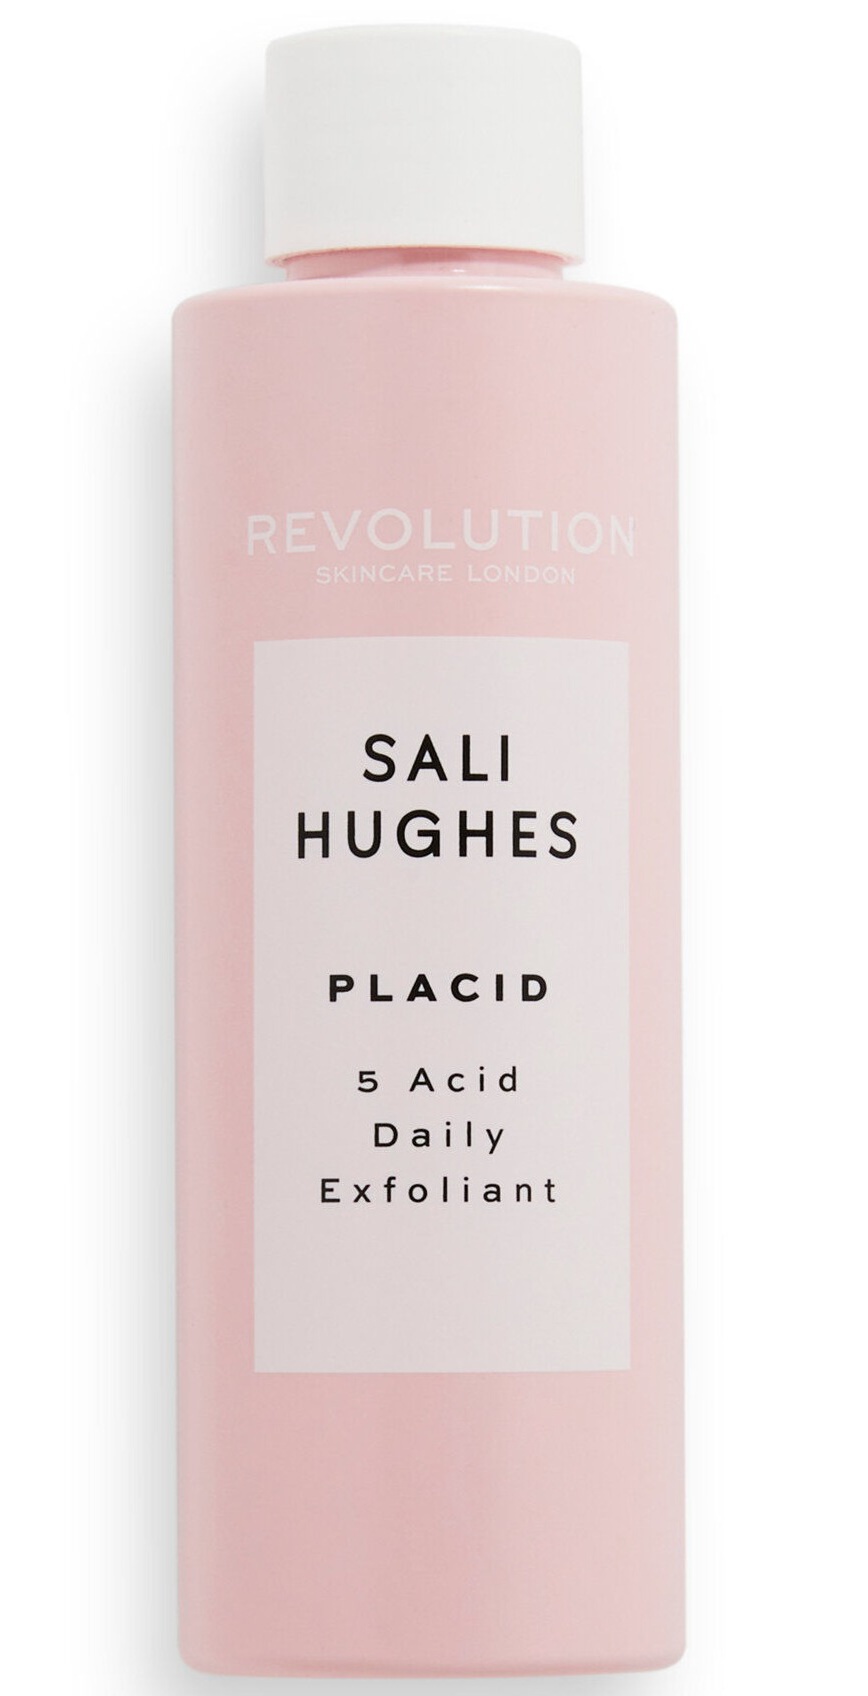 Revolution Skincare x Sali Hughes Placid 5-acid Daily Exfoliant